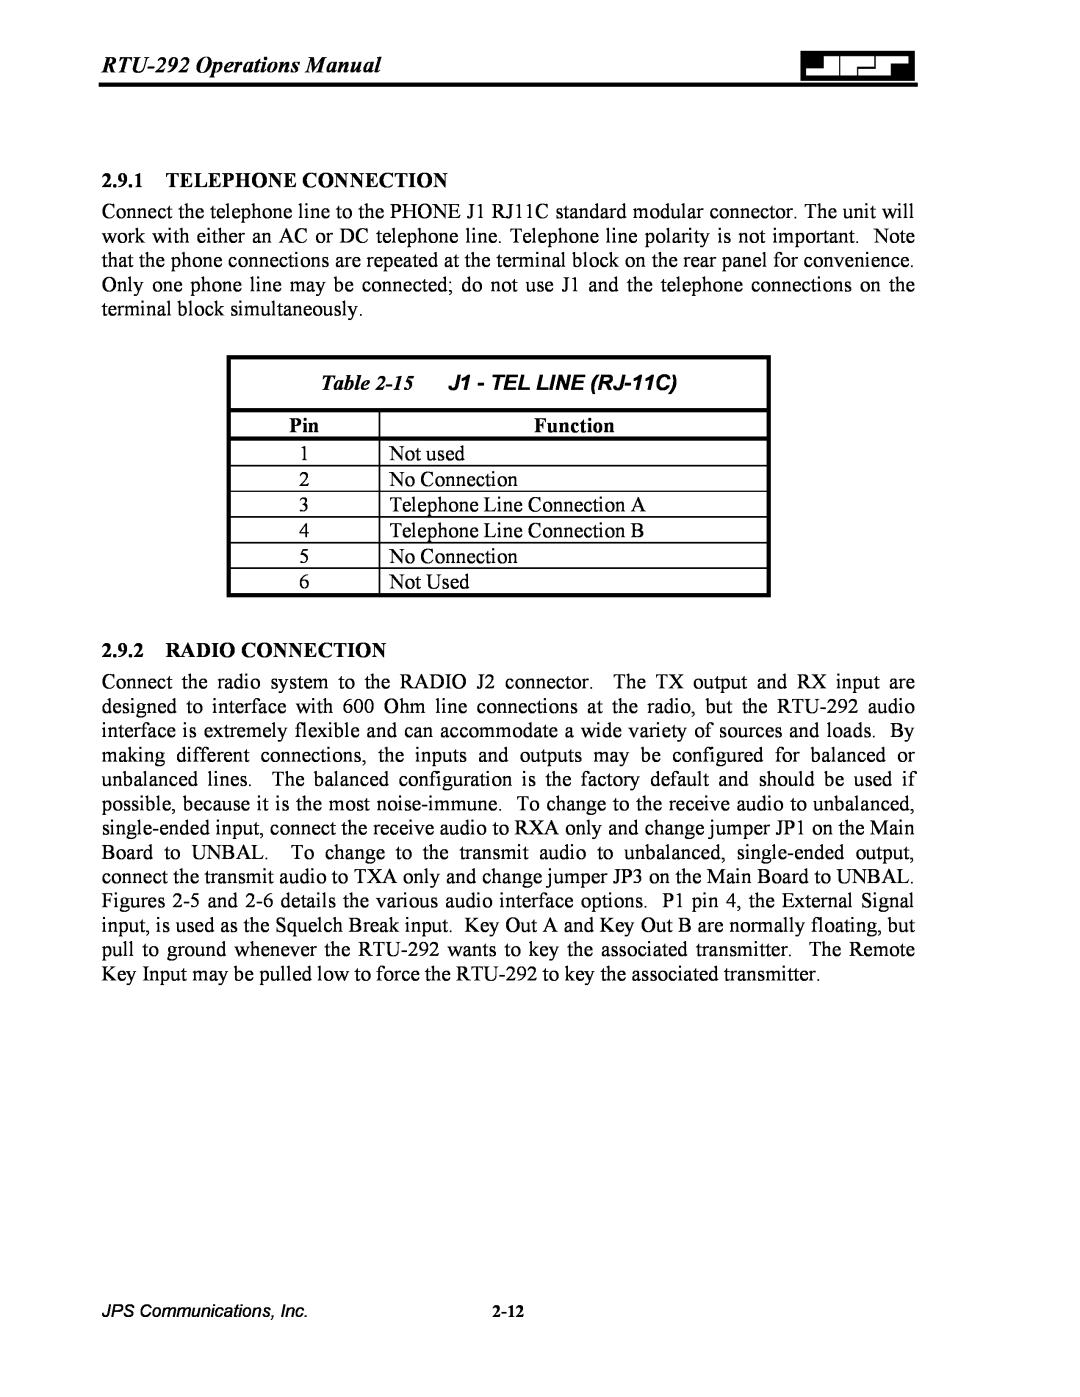 Nortel Networks RTU-292 Operations Manual, Telephone Connection, 15 J1 - TEL LINE RJ-11C, Function, Radio Connection 